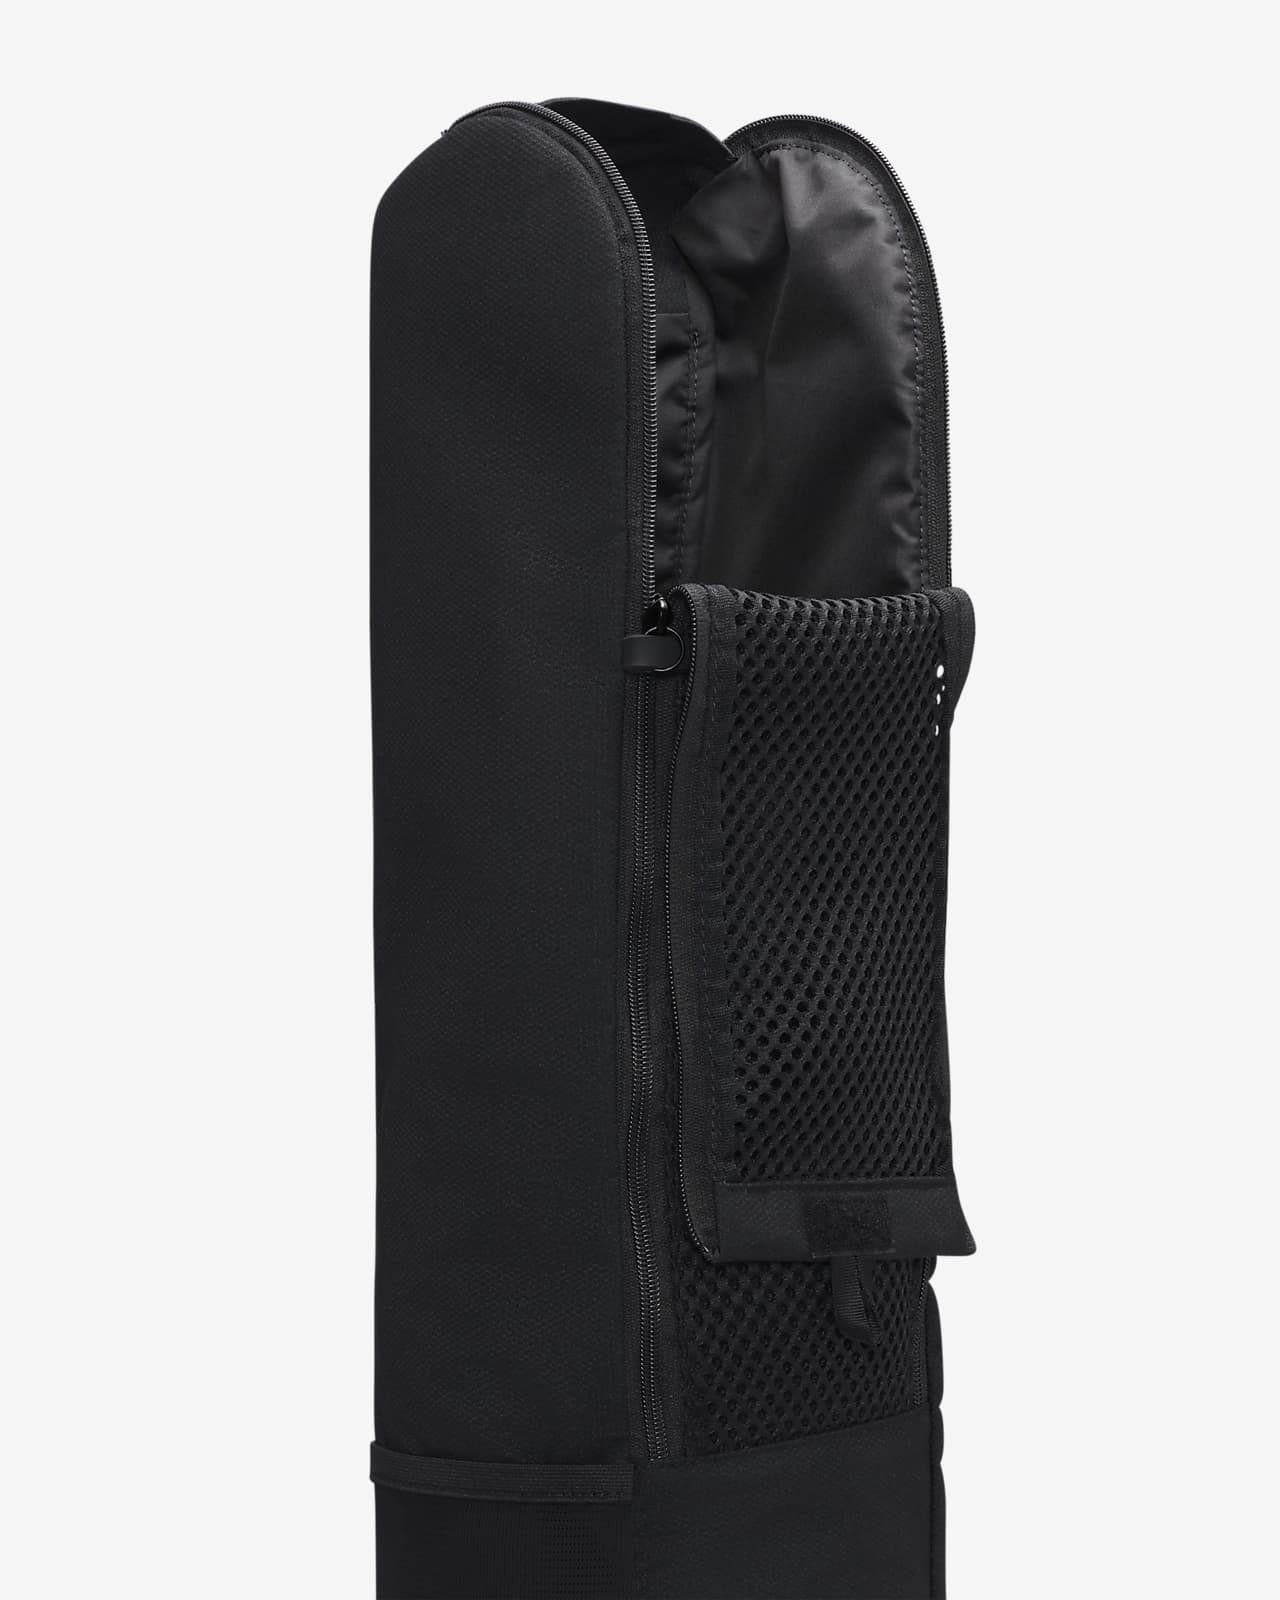 Enjoyactive Yoga Mat Bag Premium, Waterproof, Multi Pockets